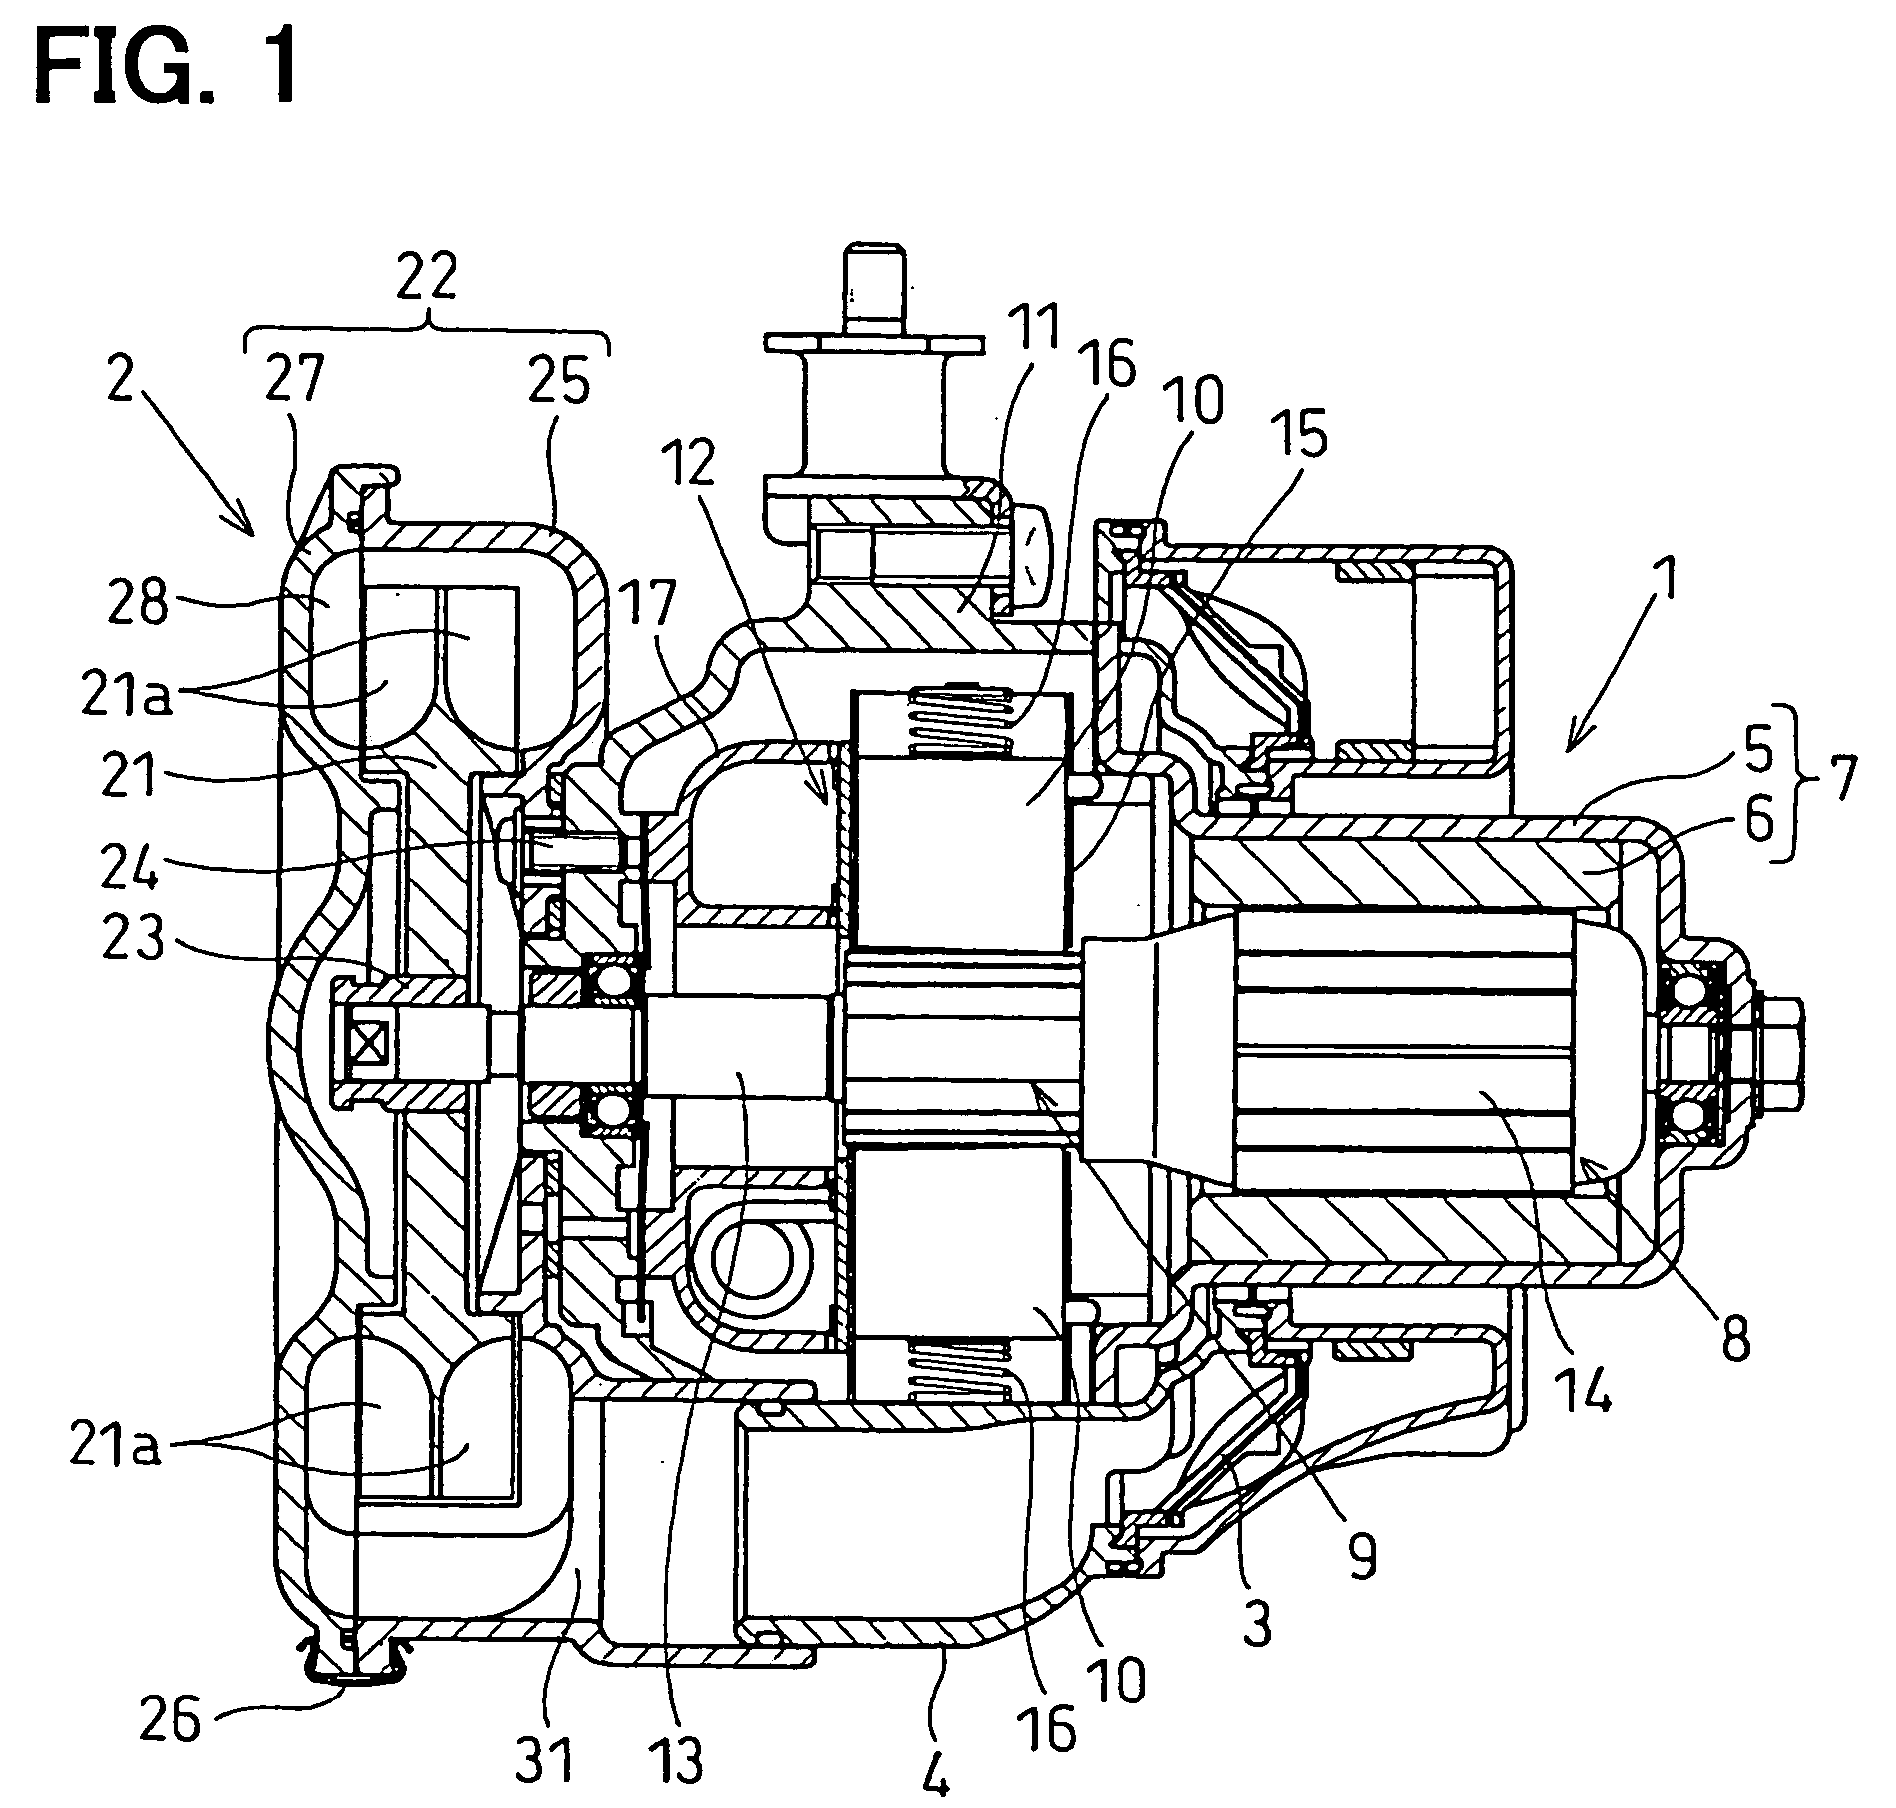 Fluid pump apparatus